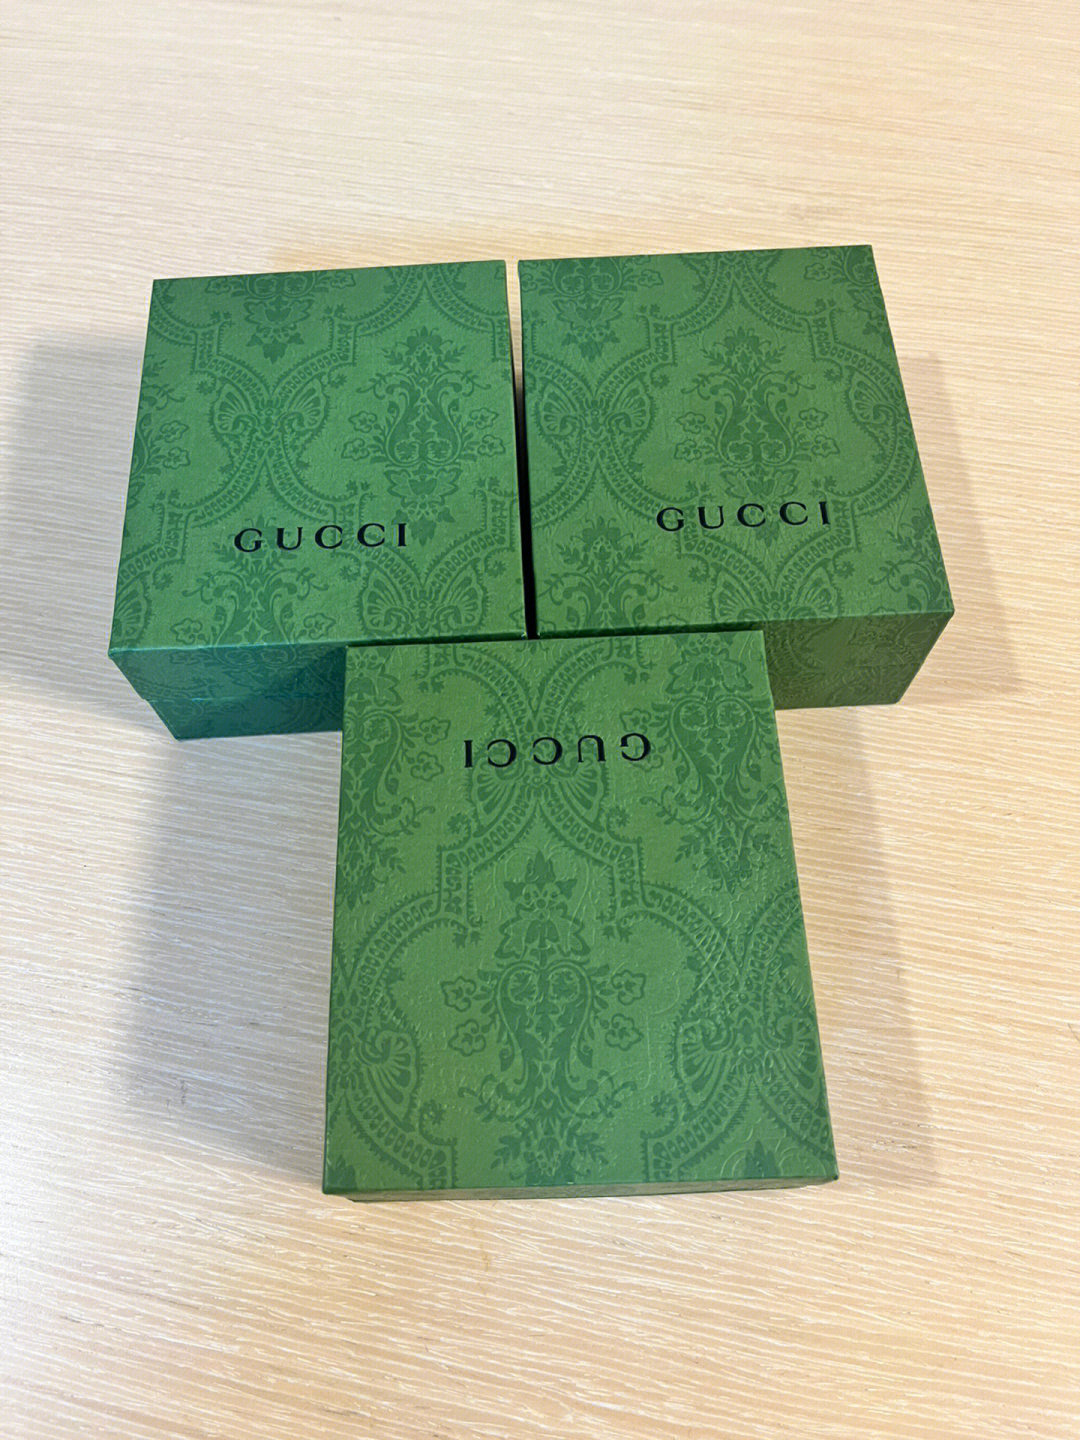 gucci盒子包装盒 真假图片